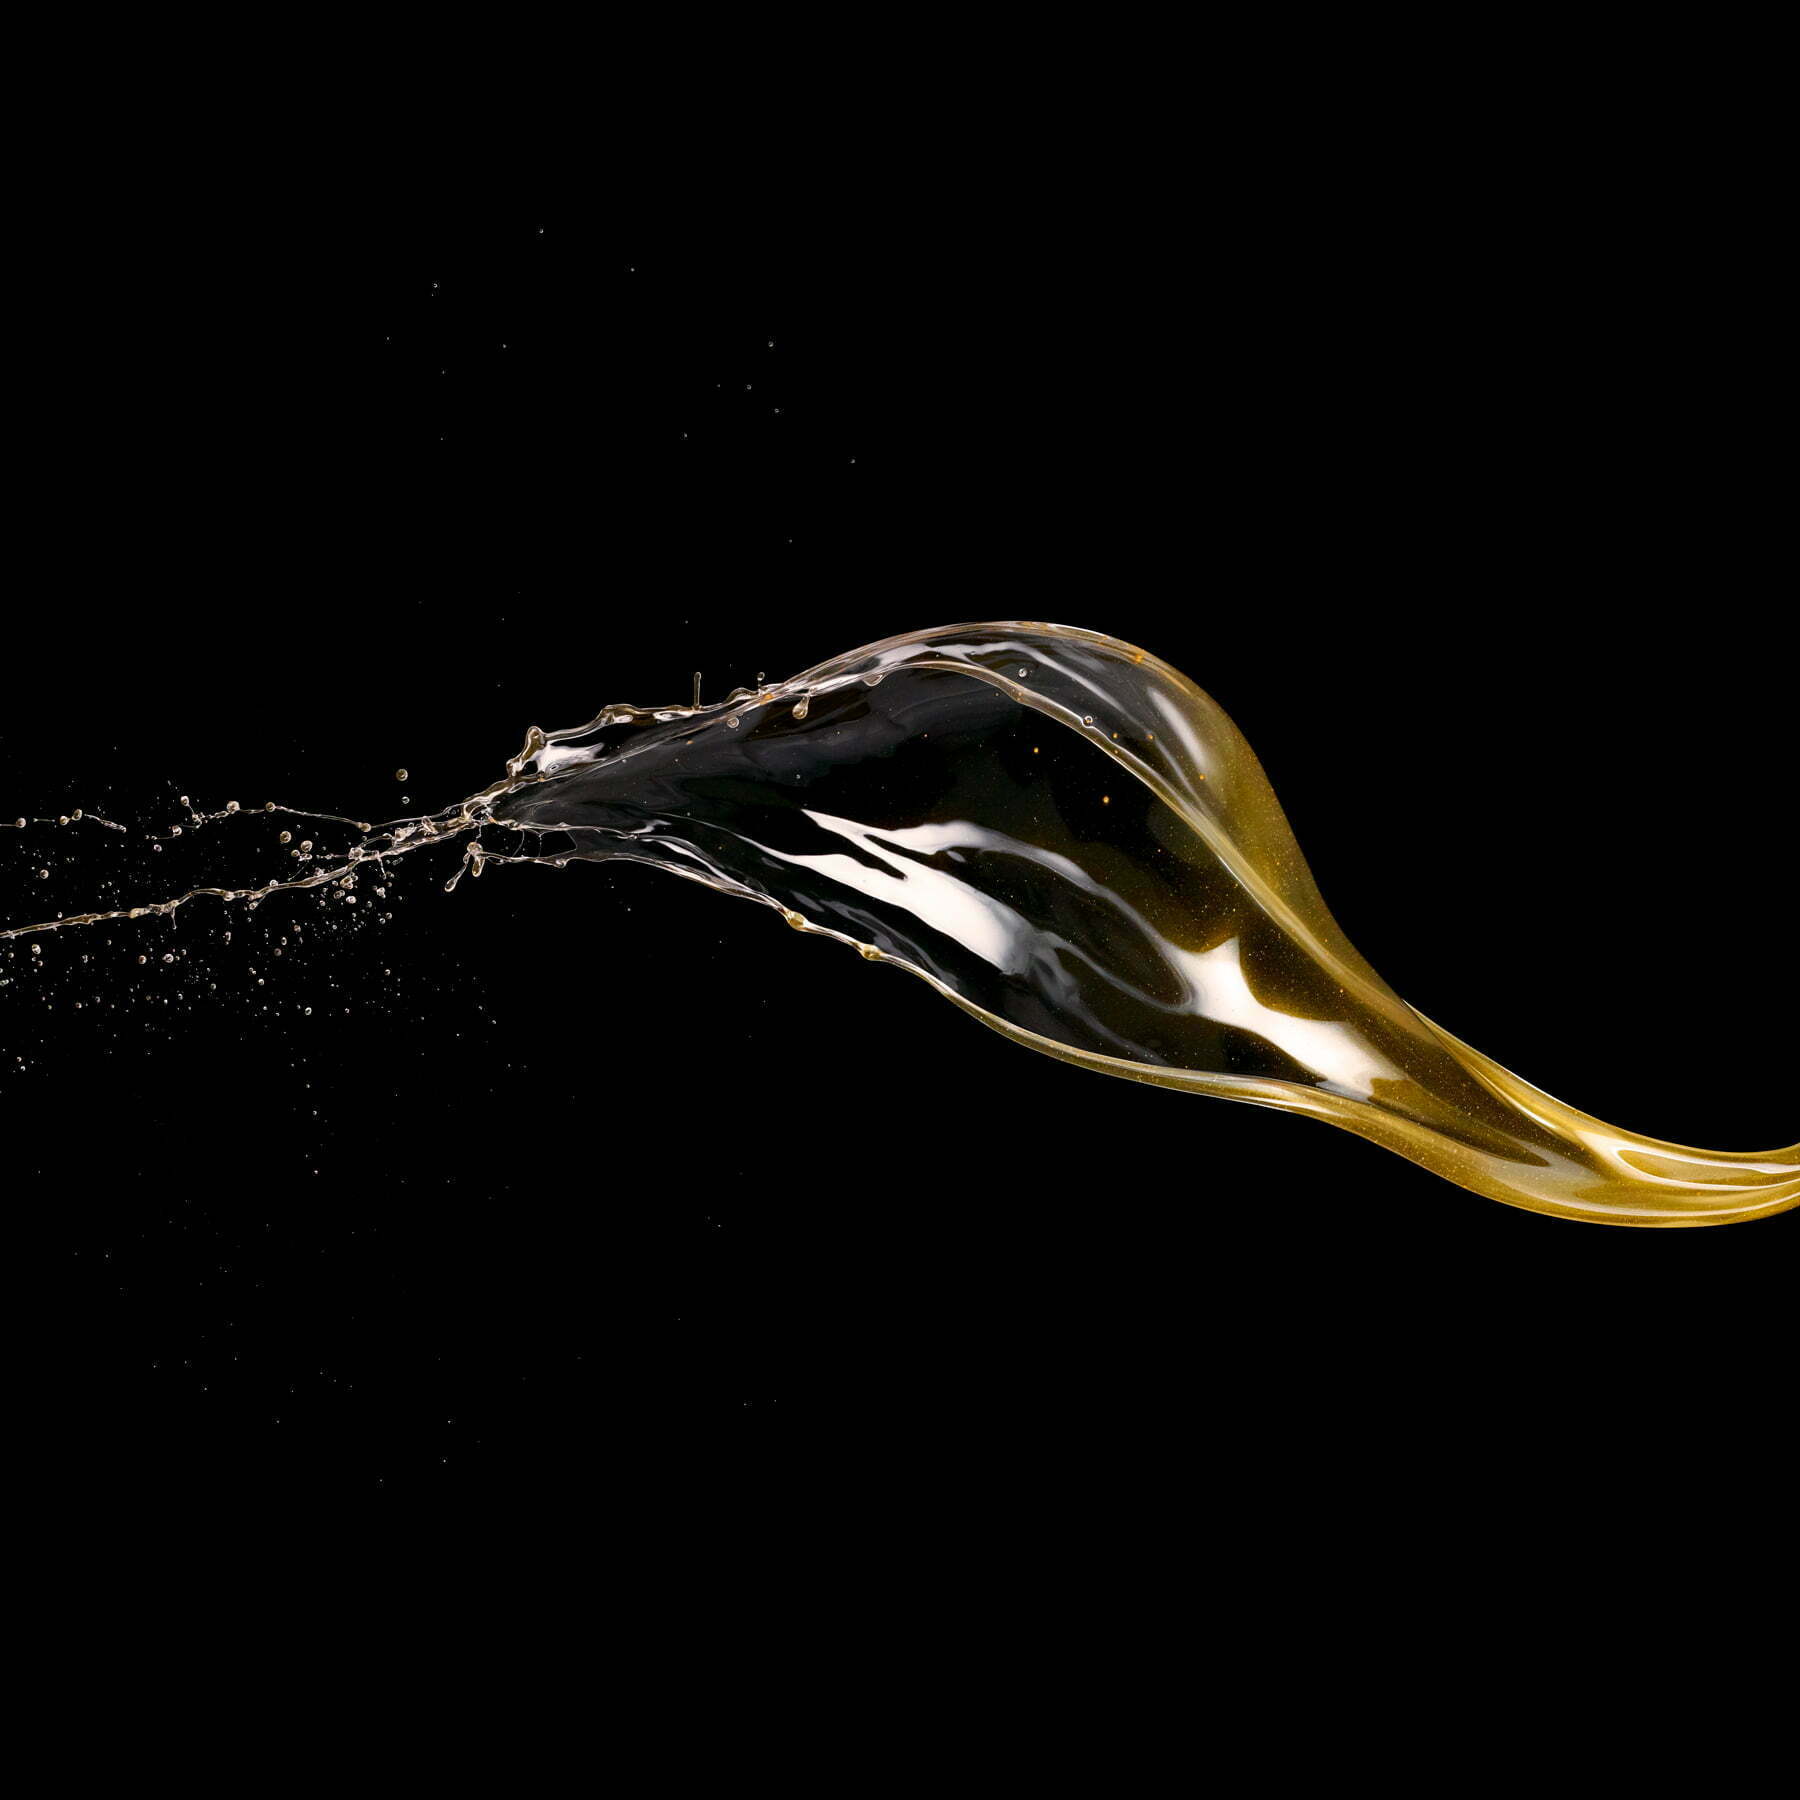 Still life high speed liquid splash photography by Mikko Tikka. Tikkurila Packaging design